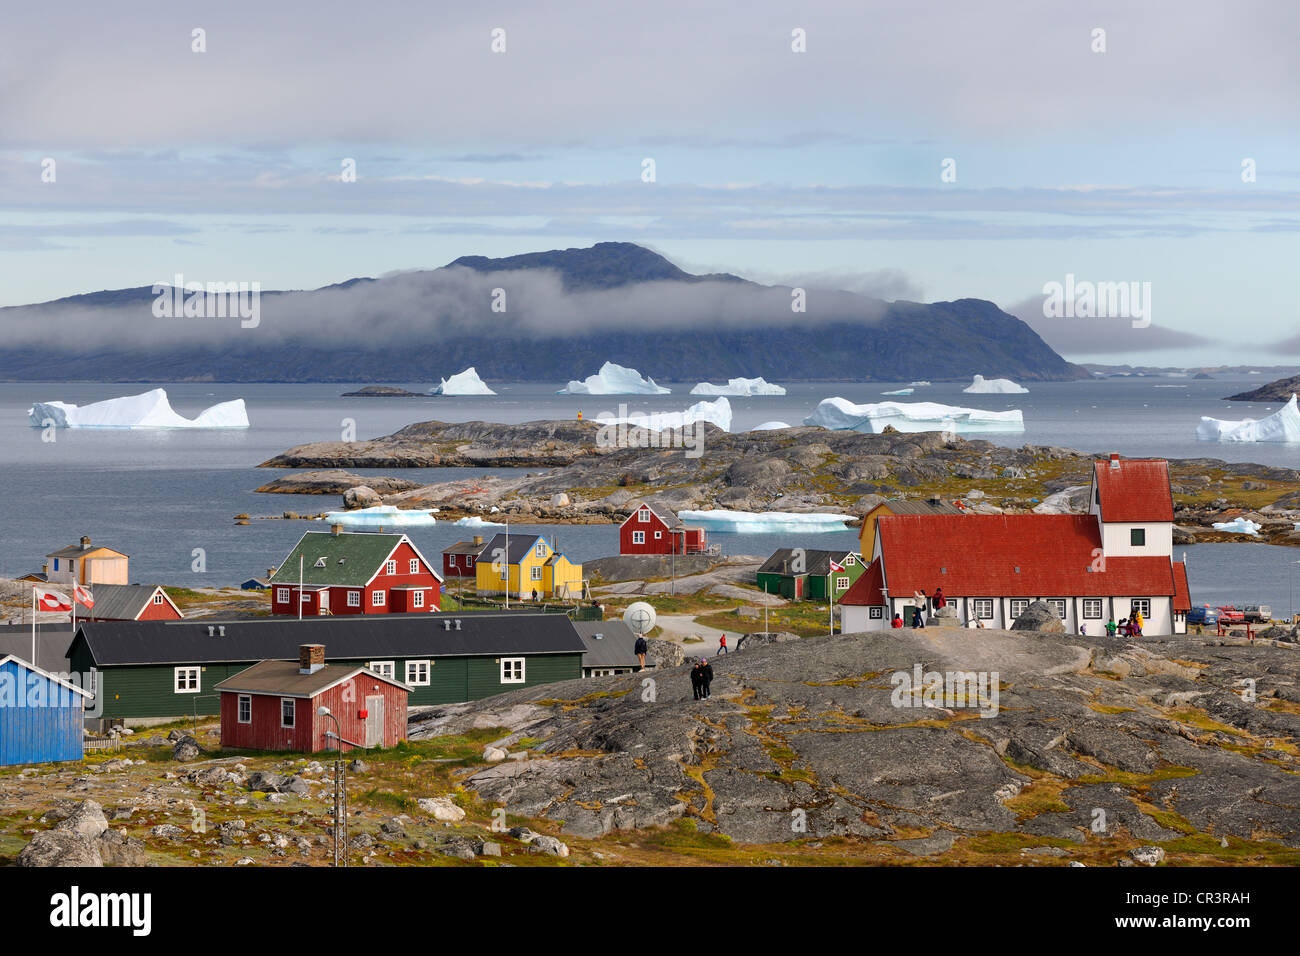 Greenland, city of Nanortalik and icebergs in the bay Stock Photo